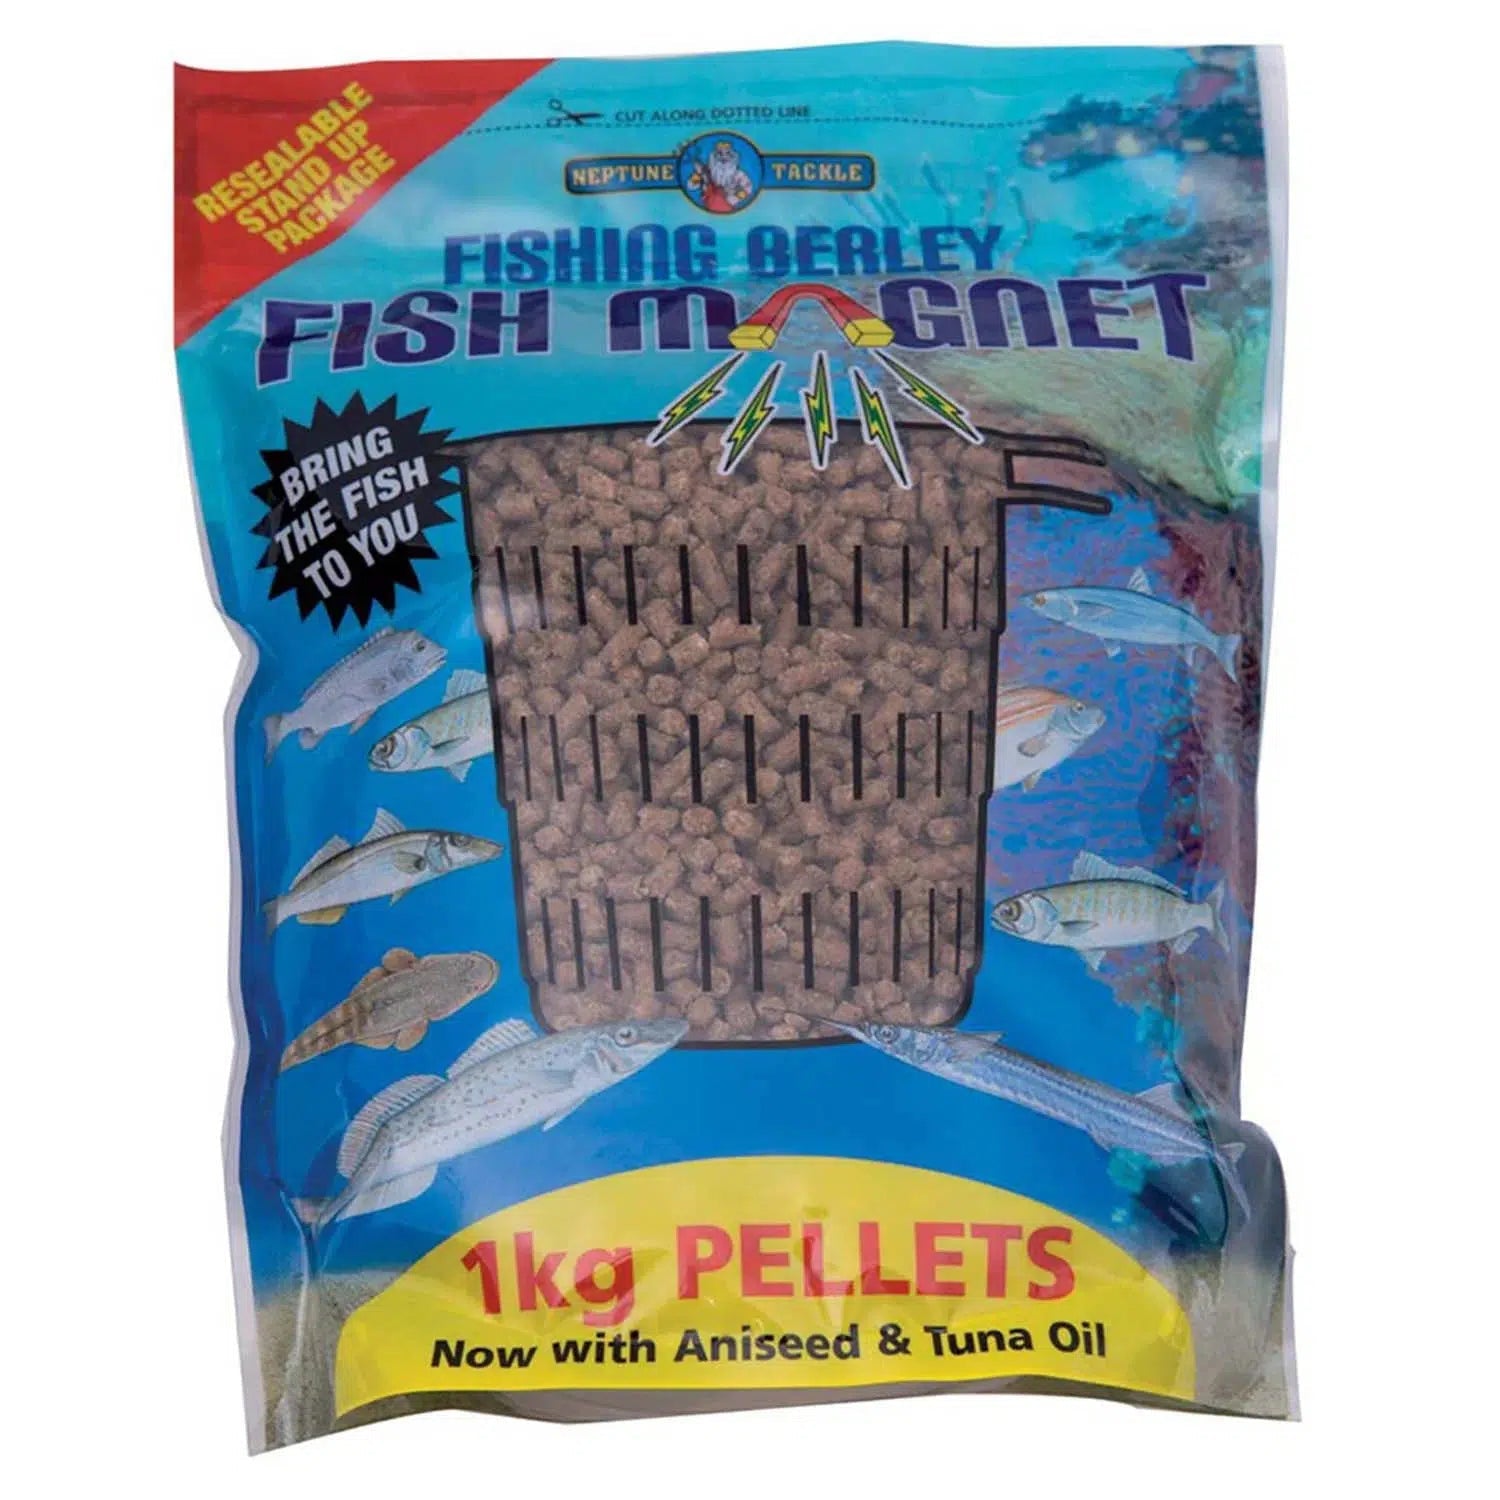 Fishing Berley Fish Magnet Pellets – Fishing Station